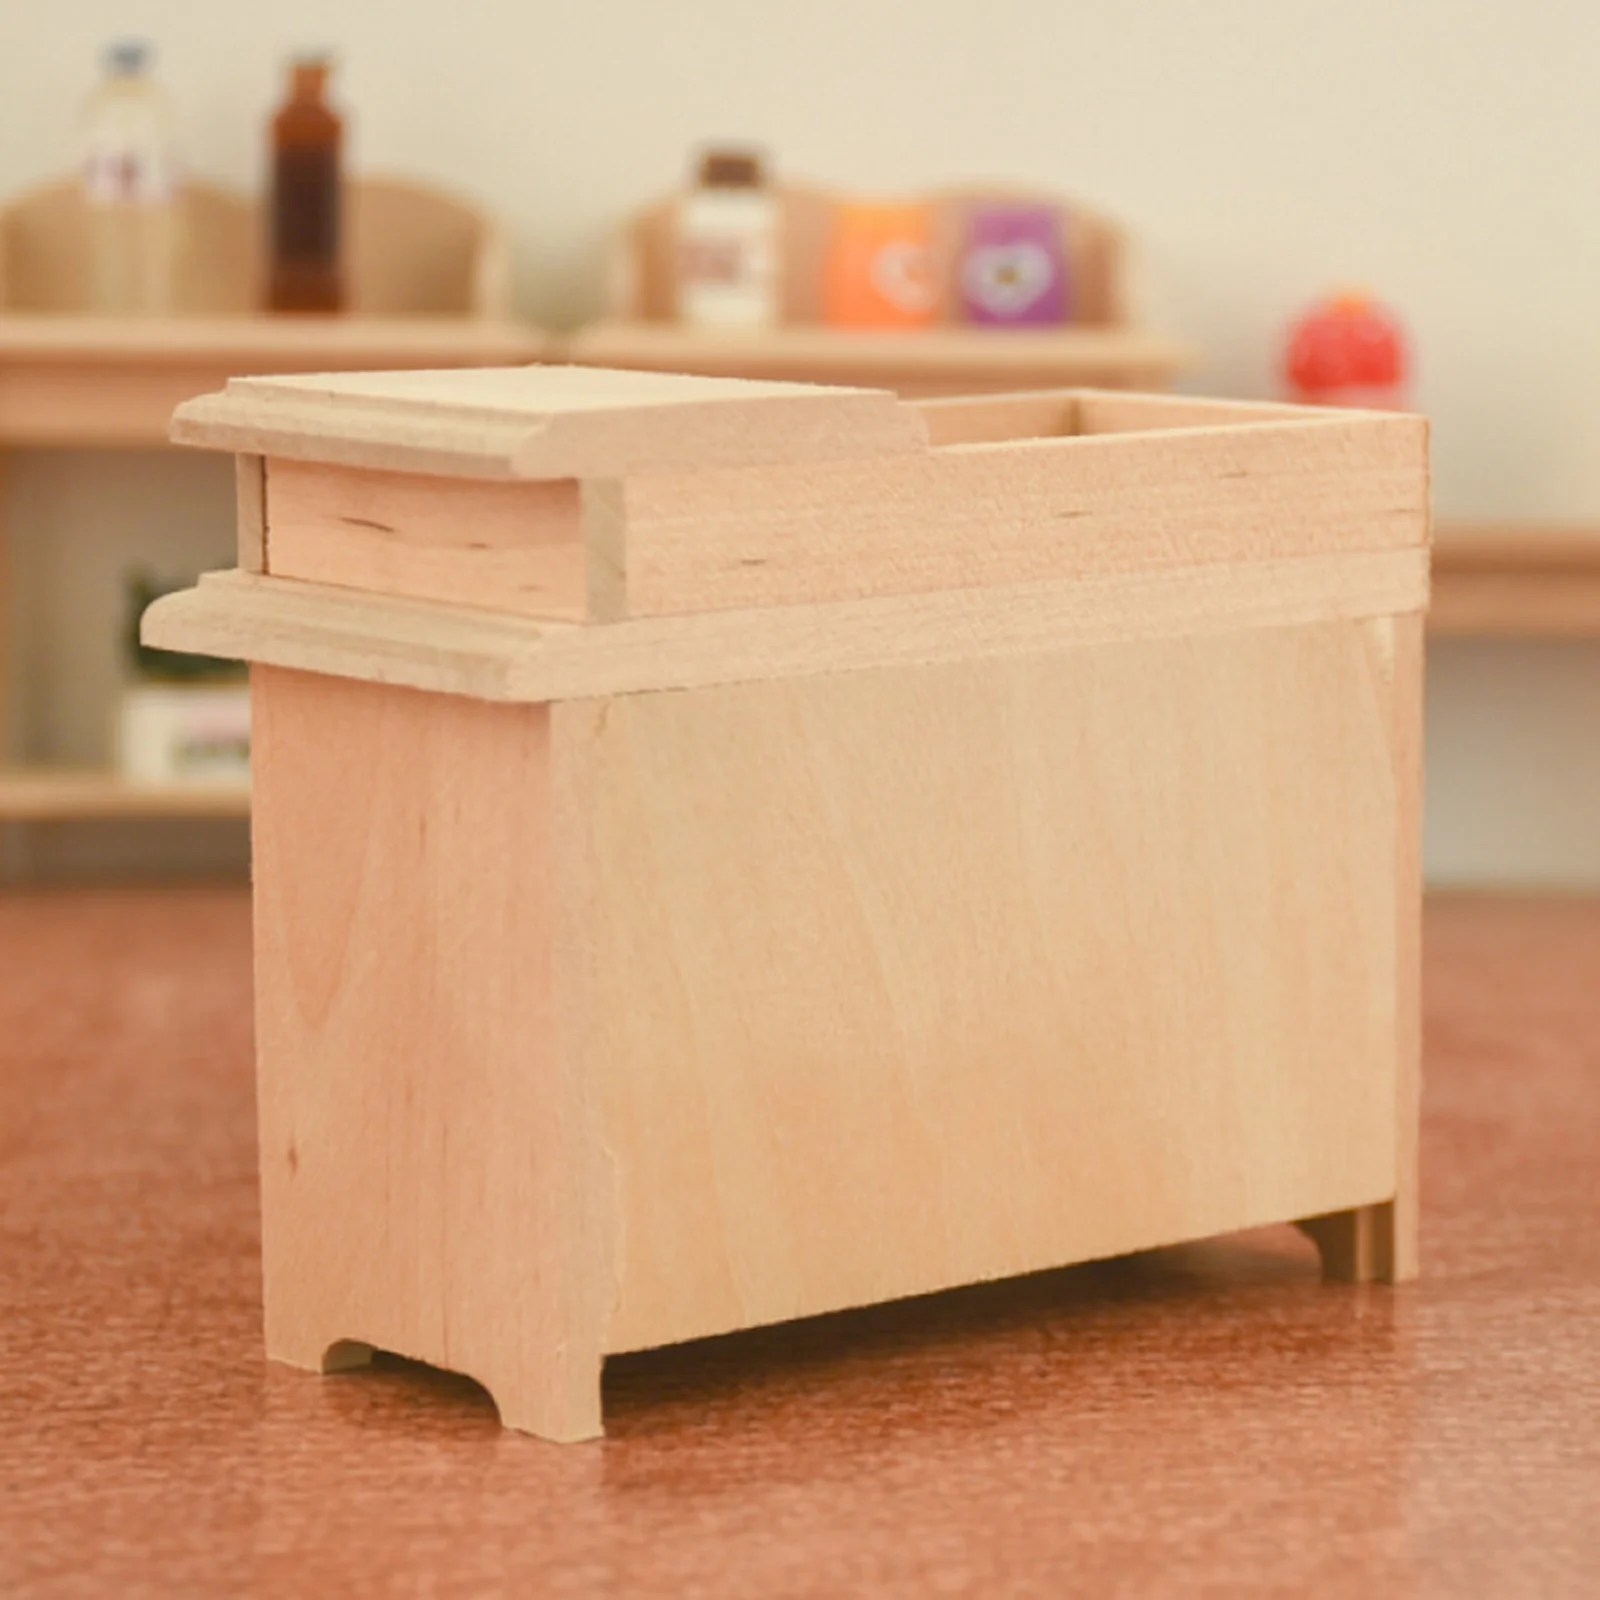 1:12 Wood Dollhouse Wash Basin Miniature Furniture Cabinet Handcraft for Bathroom Decoration Accessories Parts